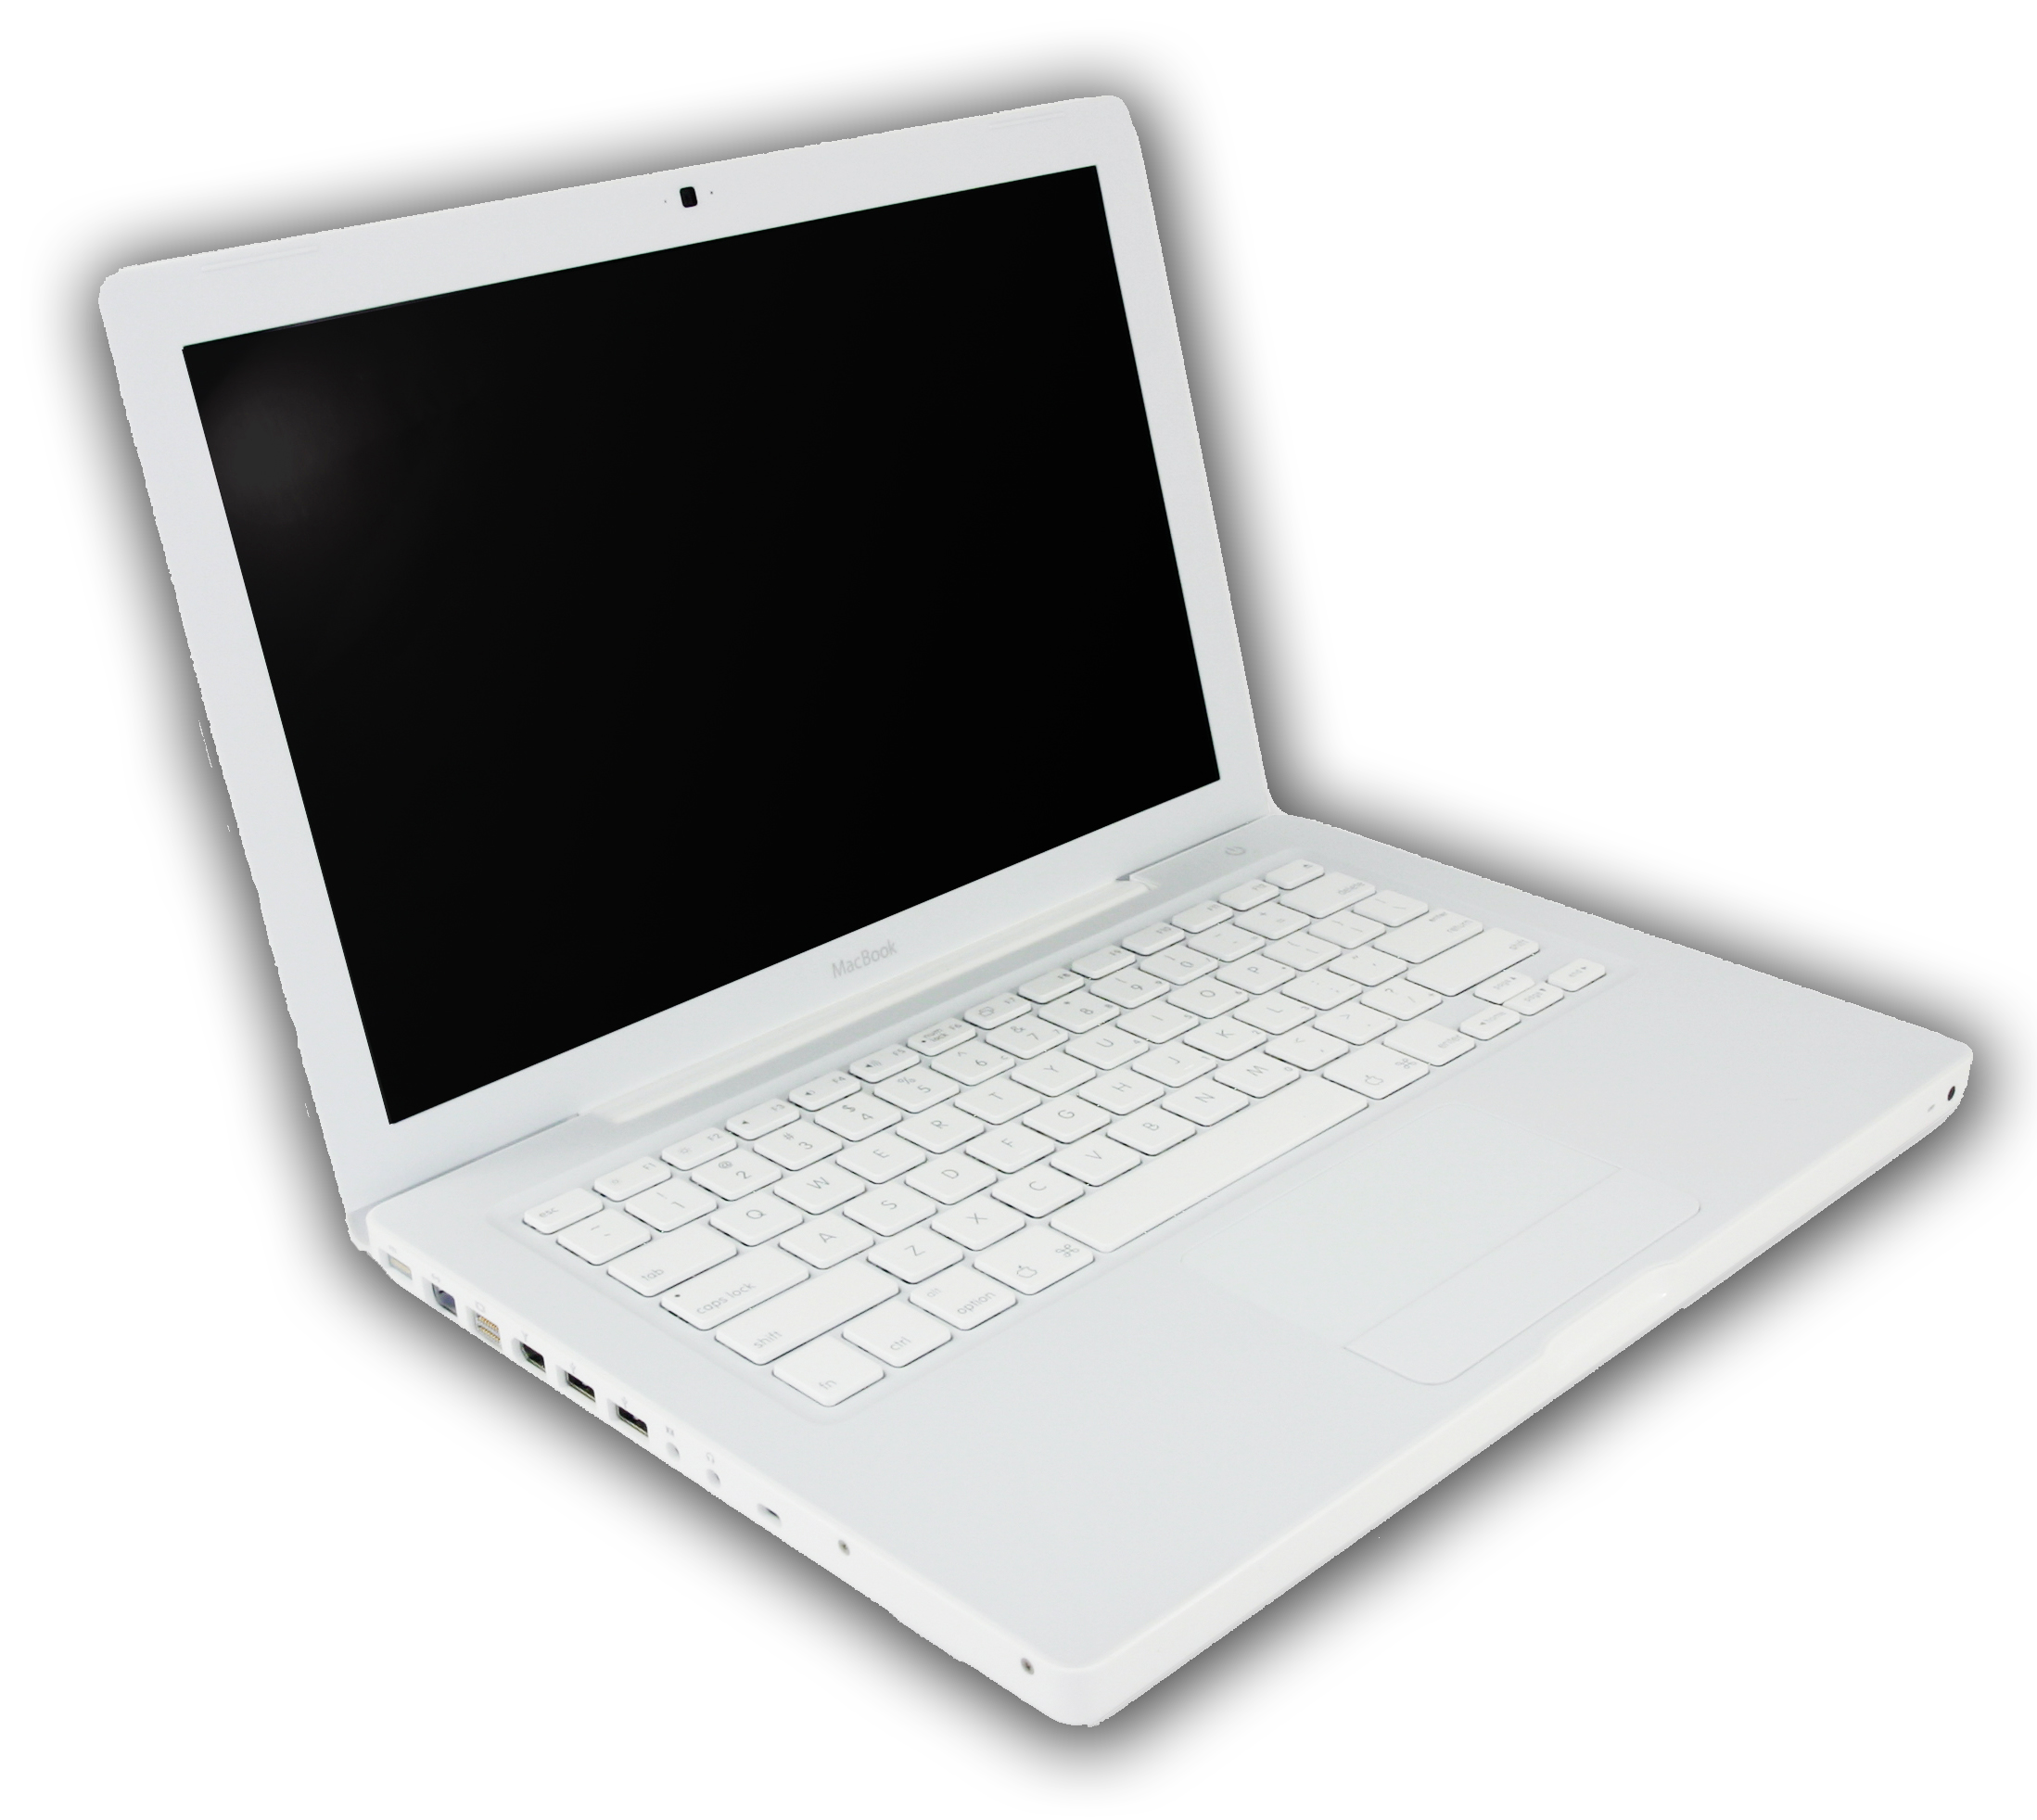 Macbook PNG Image